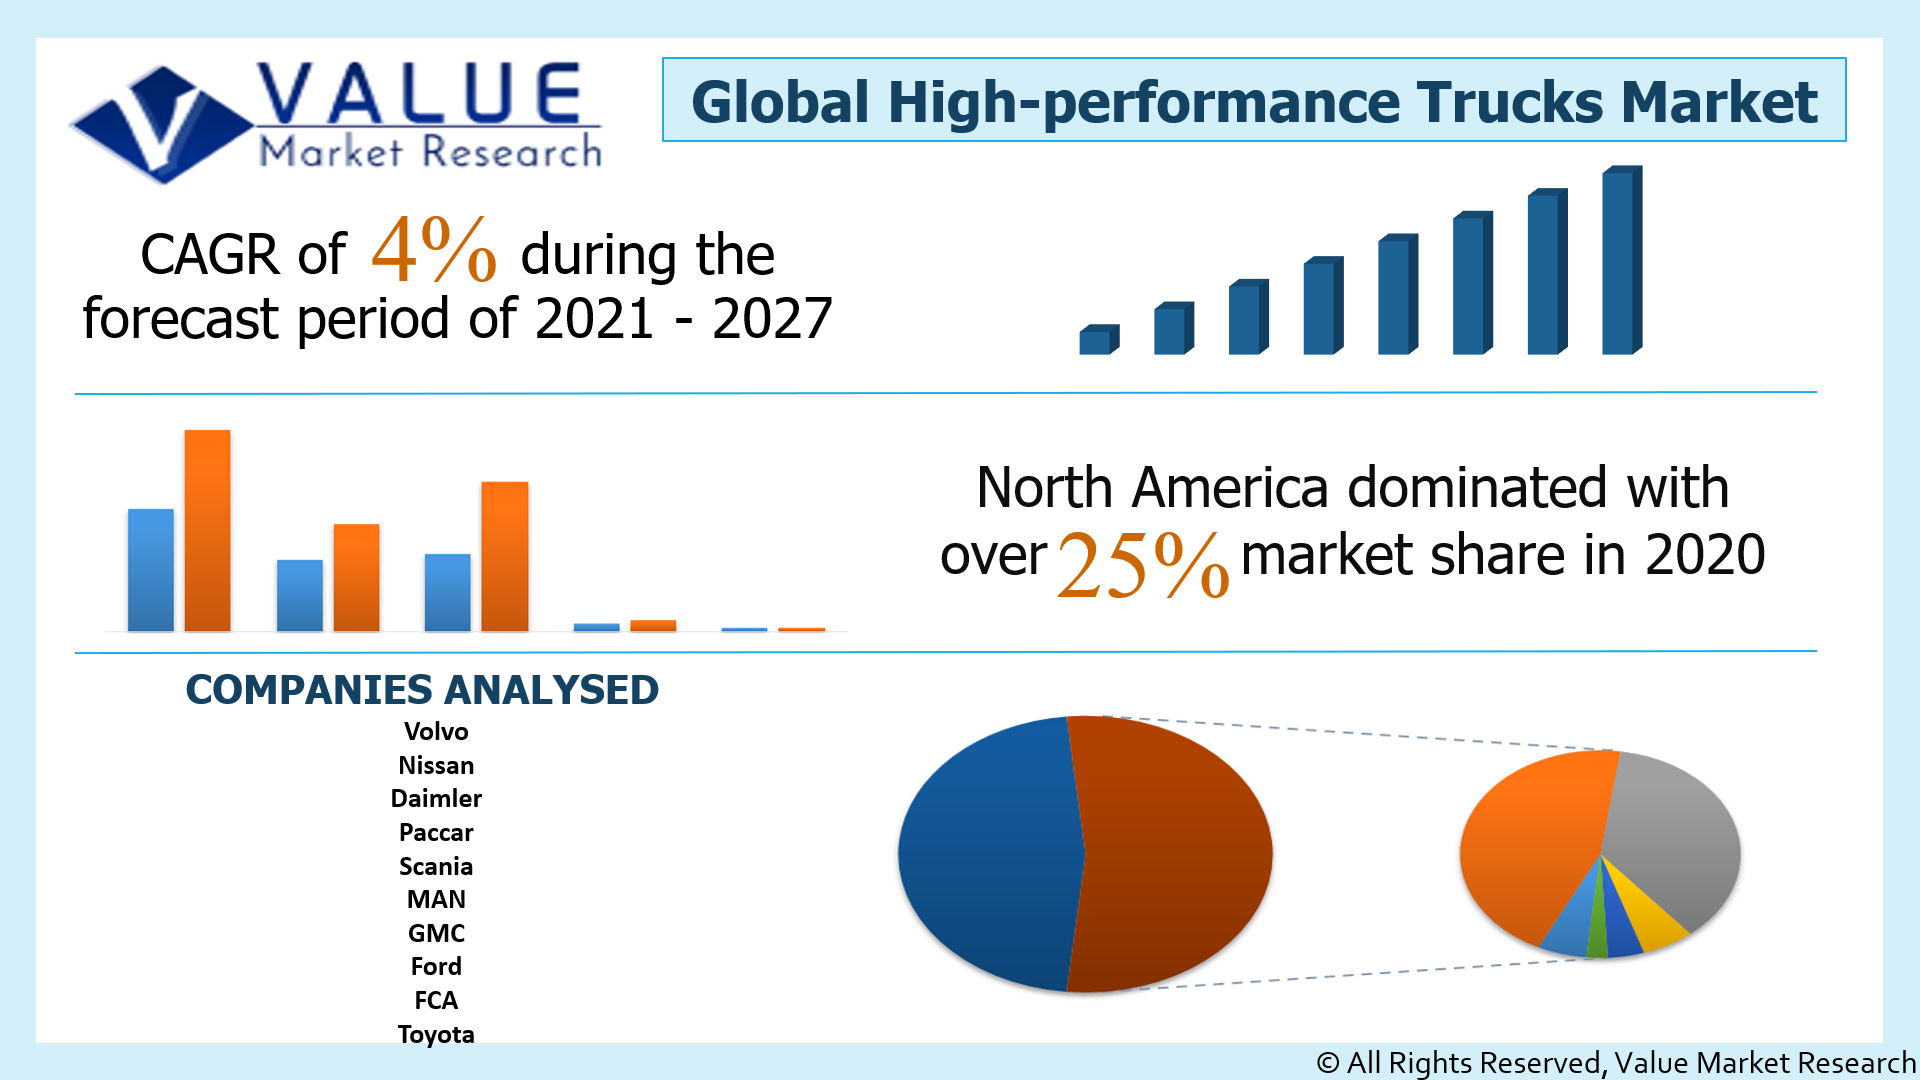 Global High-performance Trucks Market Share